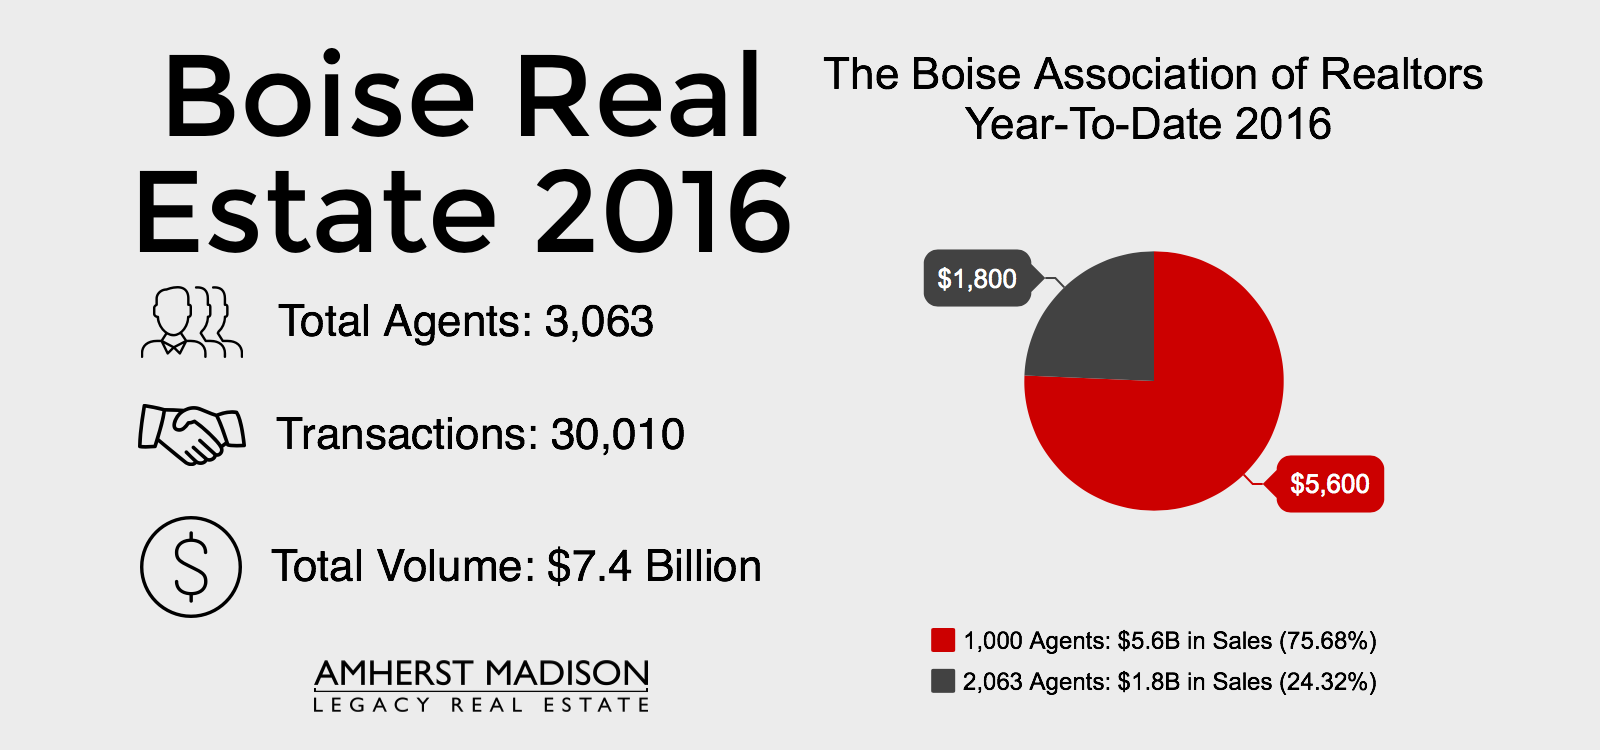 Boise Real Estate 2016